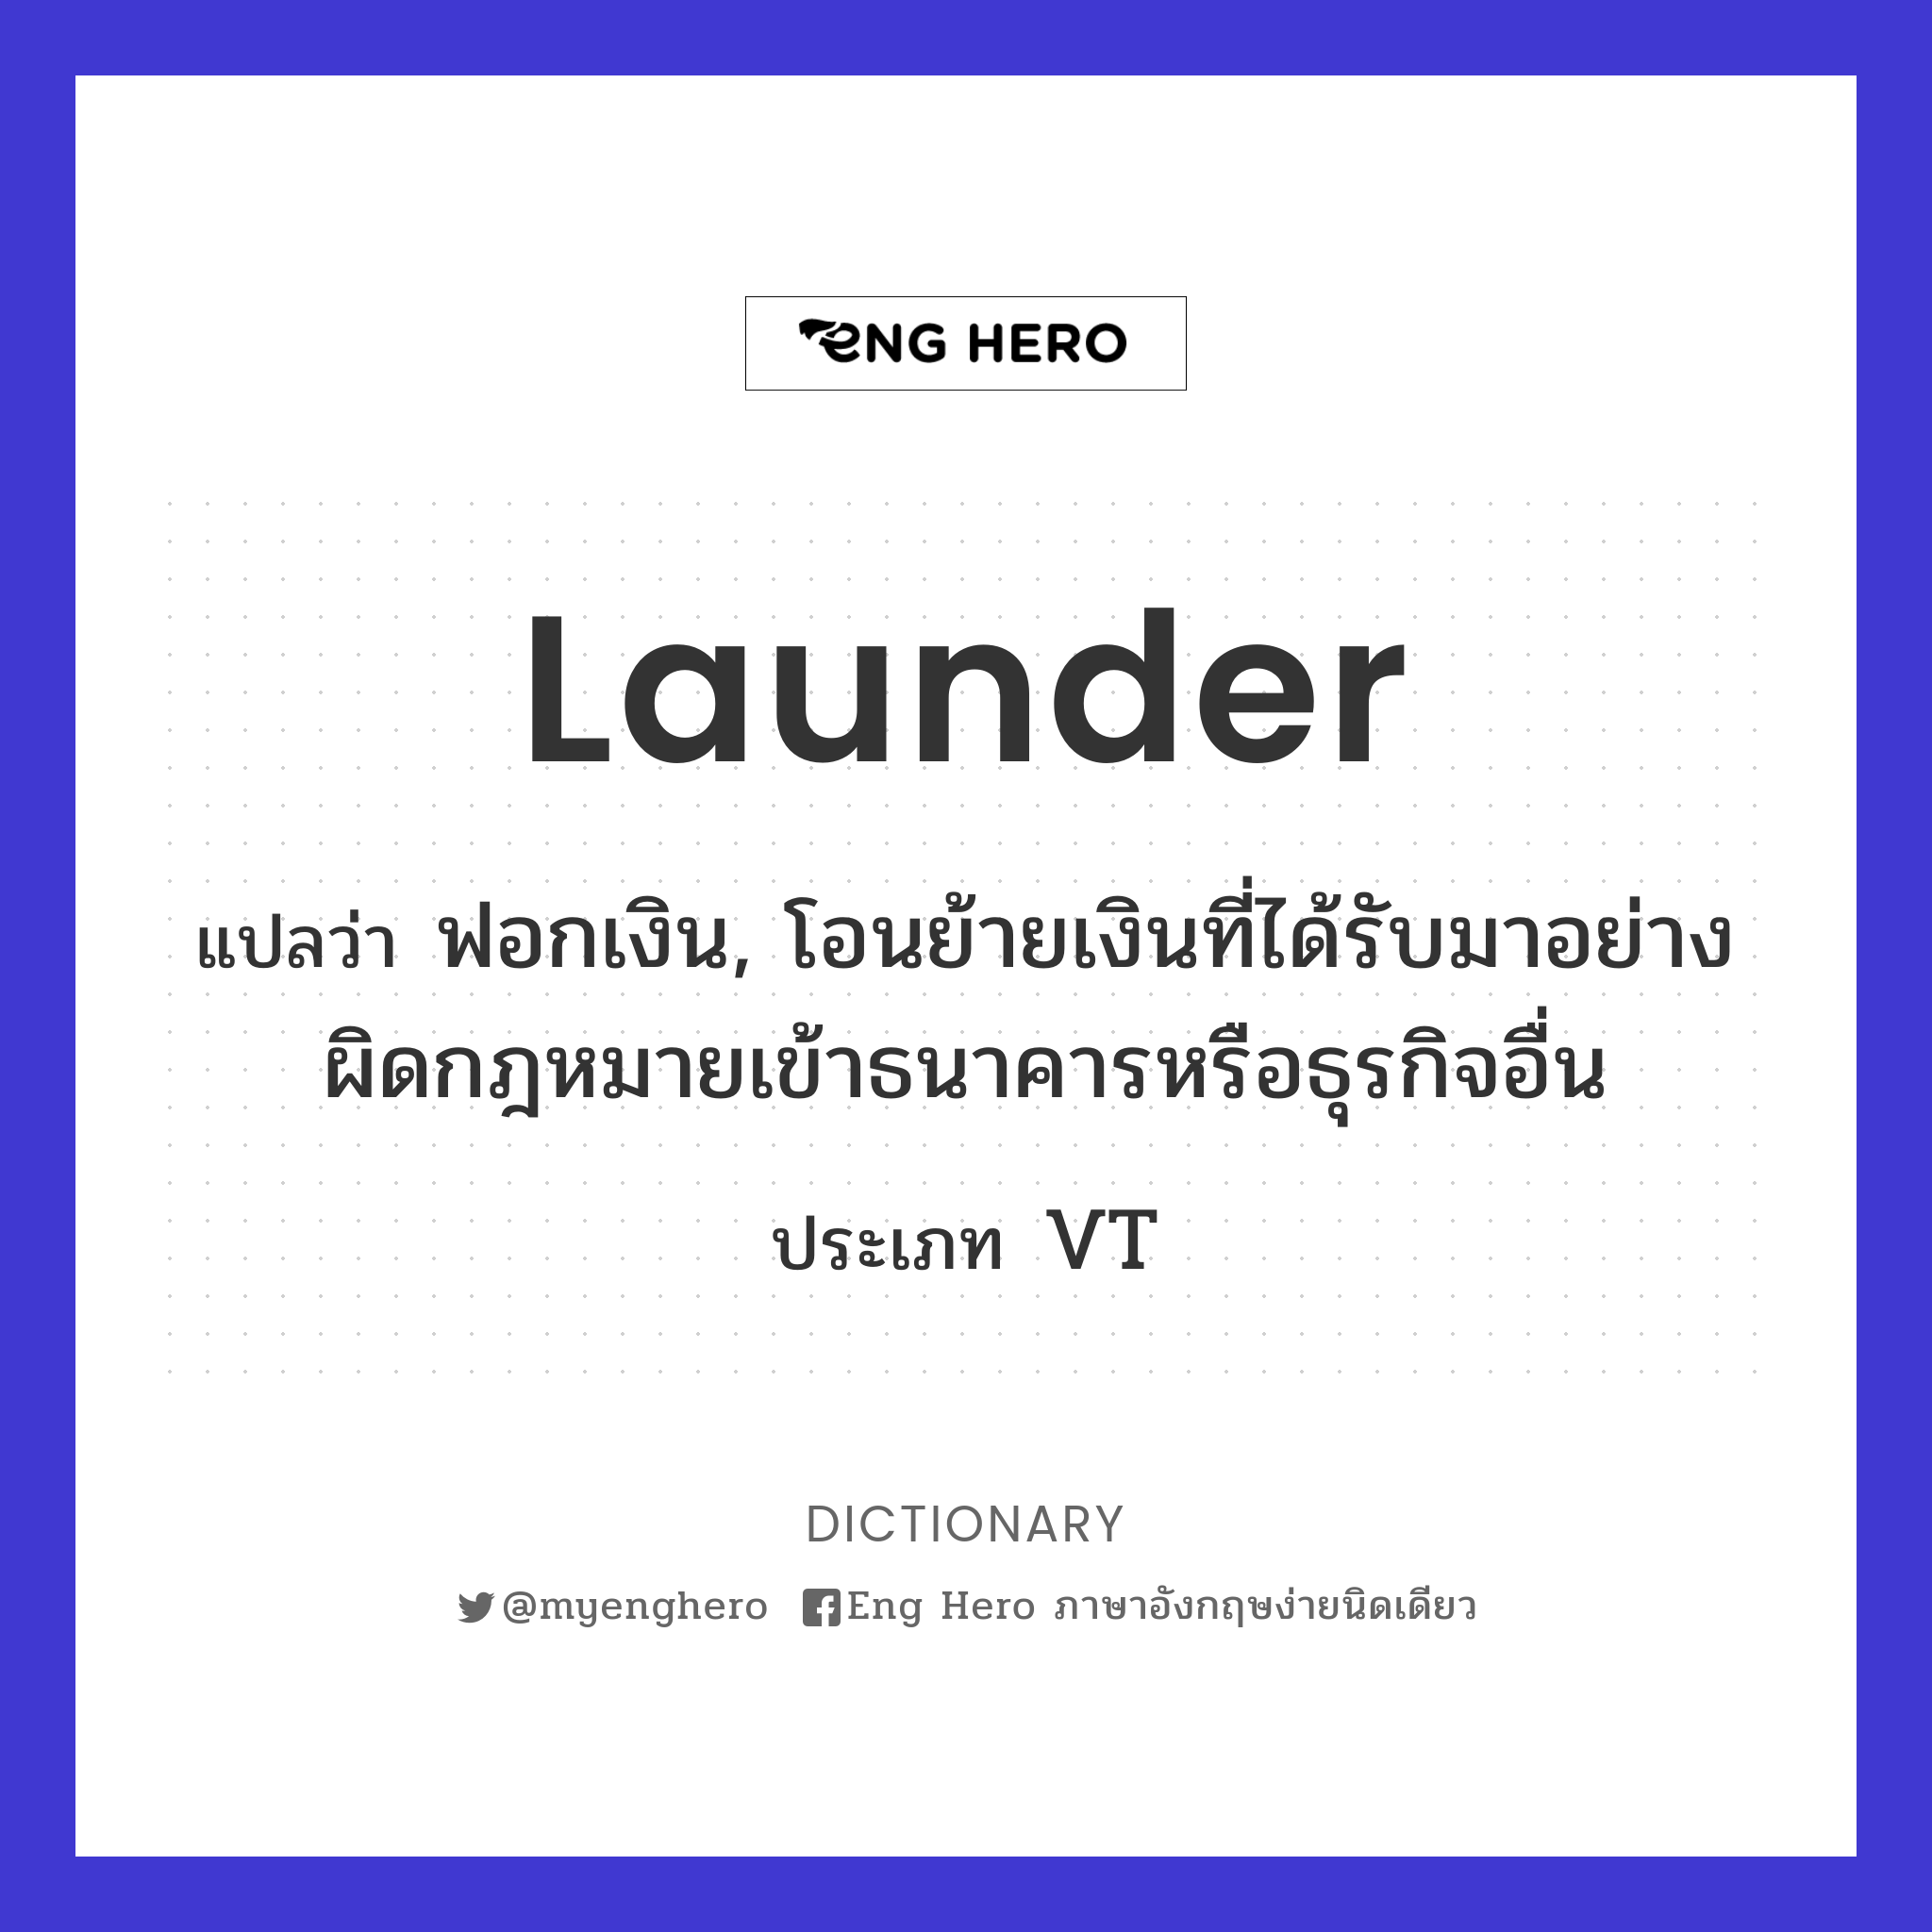 launder